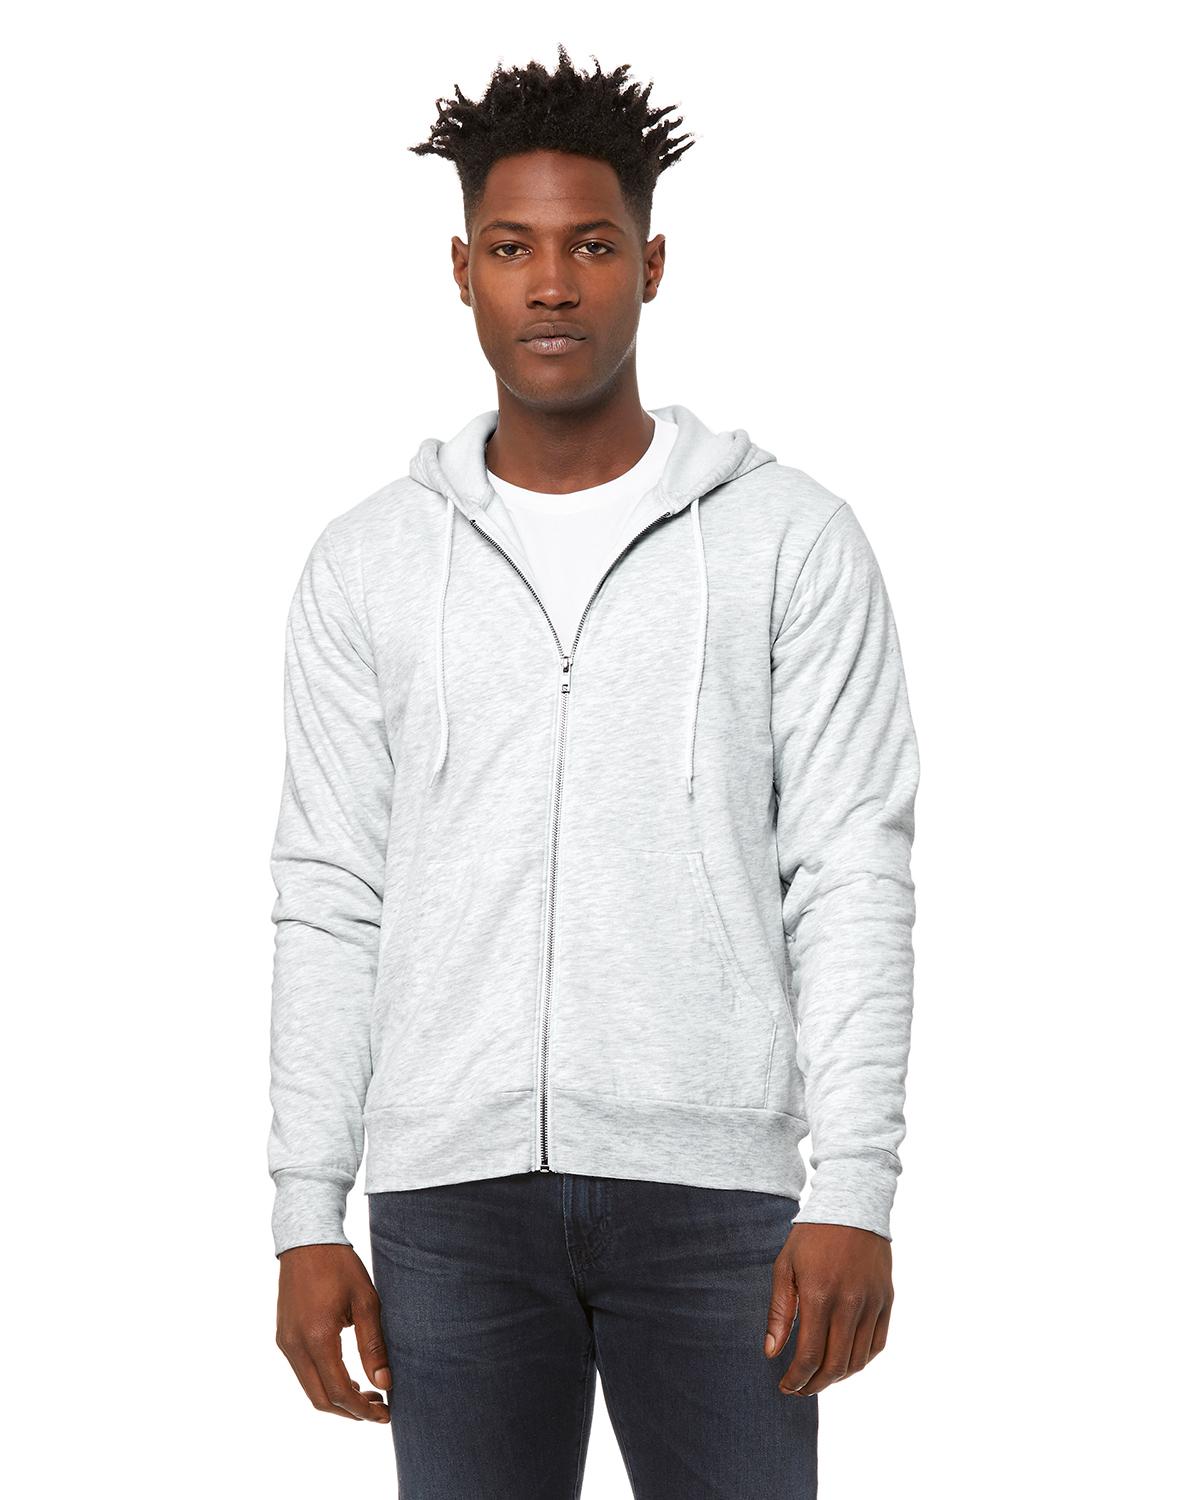 Unisex Zipper Hoodie for Men Women Sweatshirts Casual Full Zip Hooded  Sweaters Gifts - XS S M L XL 2XL - Plain Long Sleeve Hoody Womens Mens Tee